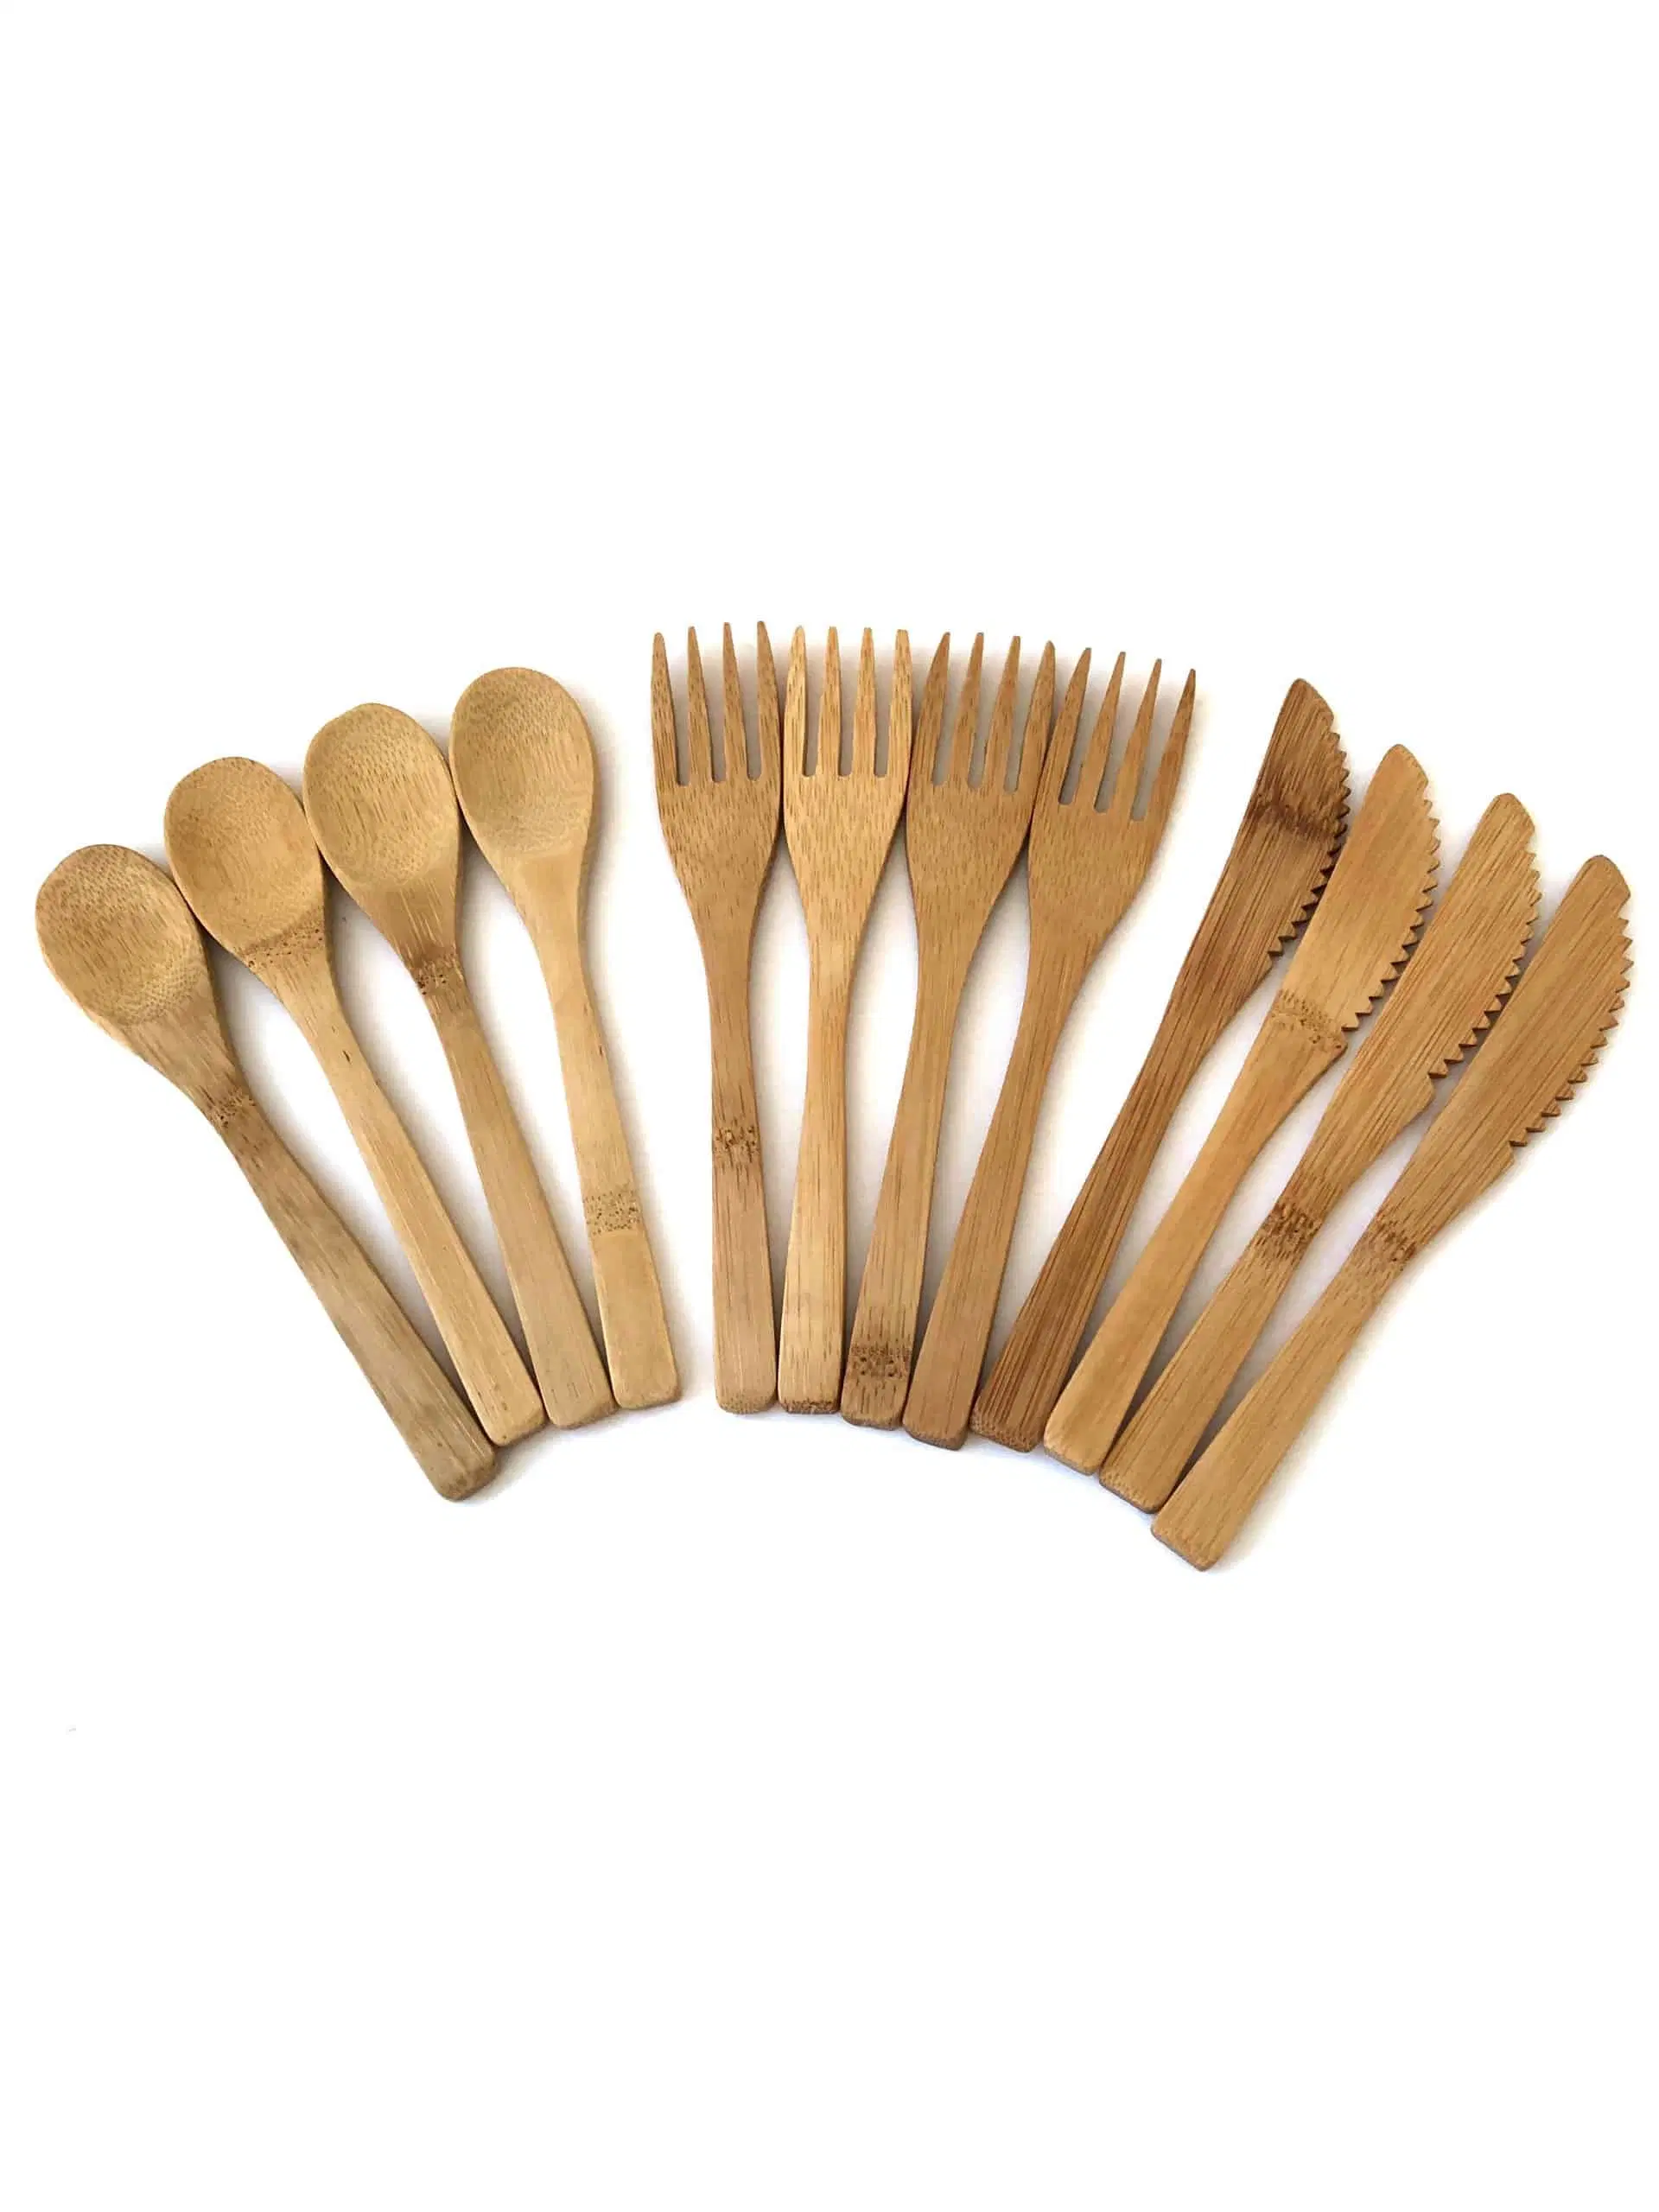 Wholesale/Supplier Bamboo Utensils Set Cooking Spoon Spatula Bamboo Turner Kitchen Utensils